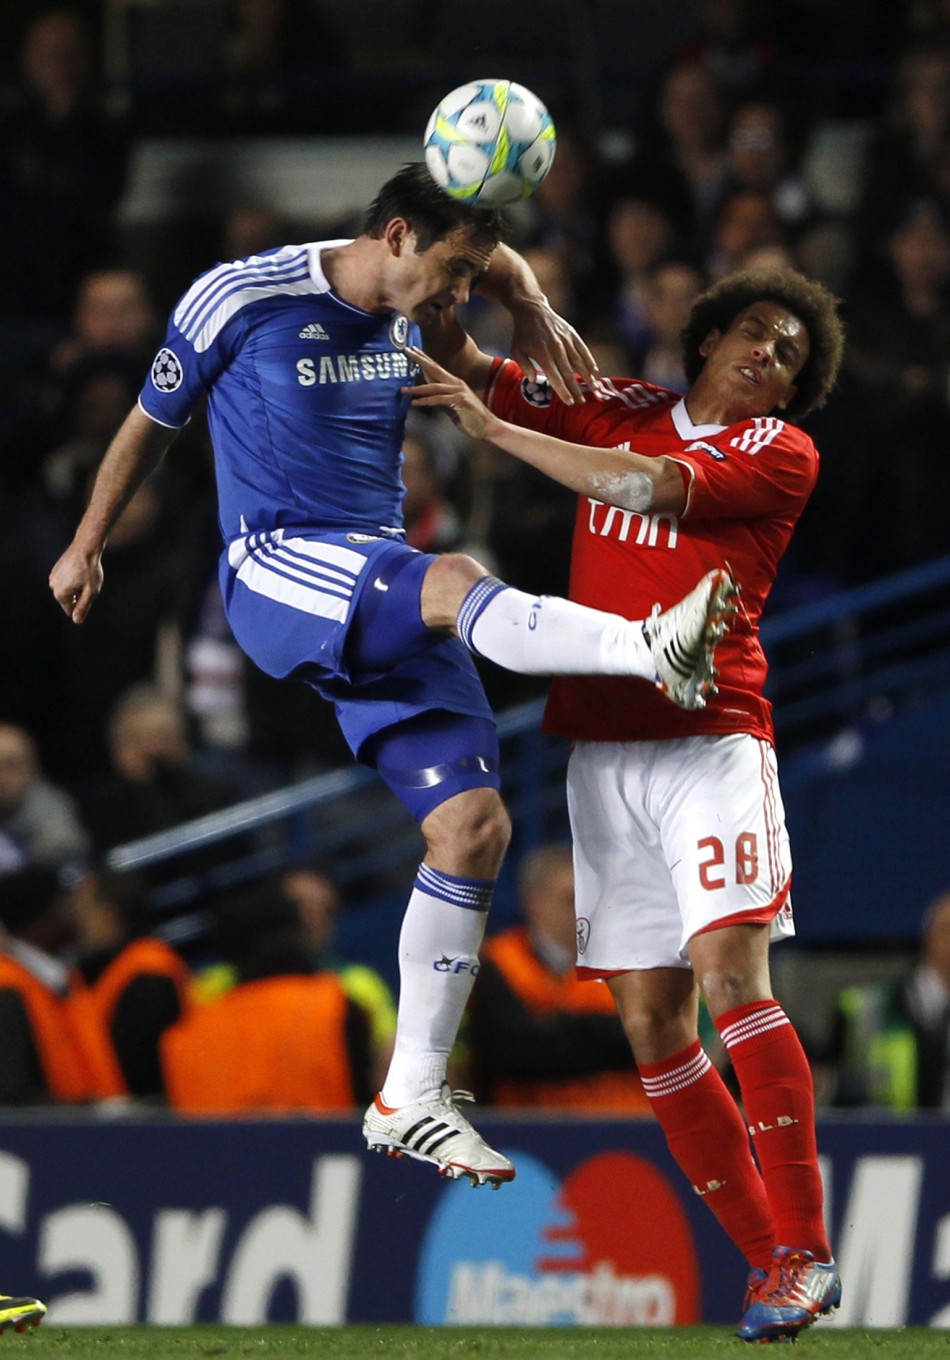 Soccer -  Chelsea v Benfica - Champions League - Second Leg - Quarter Finals - Stamford Bridge